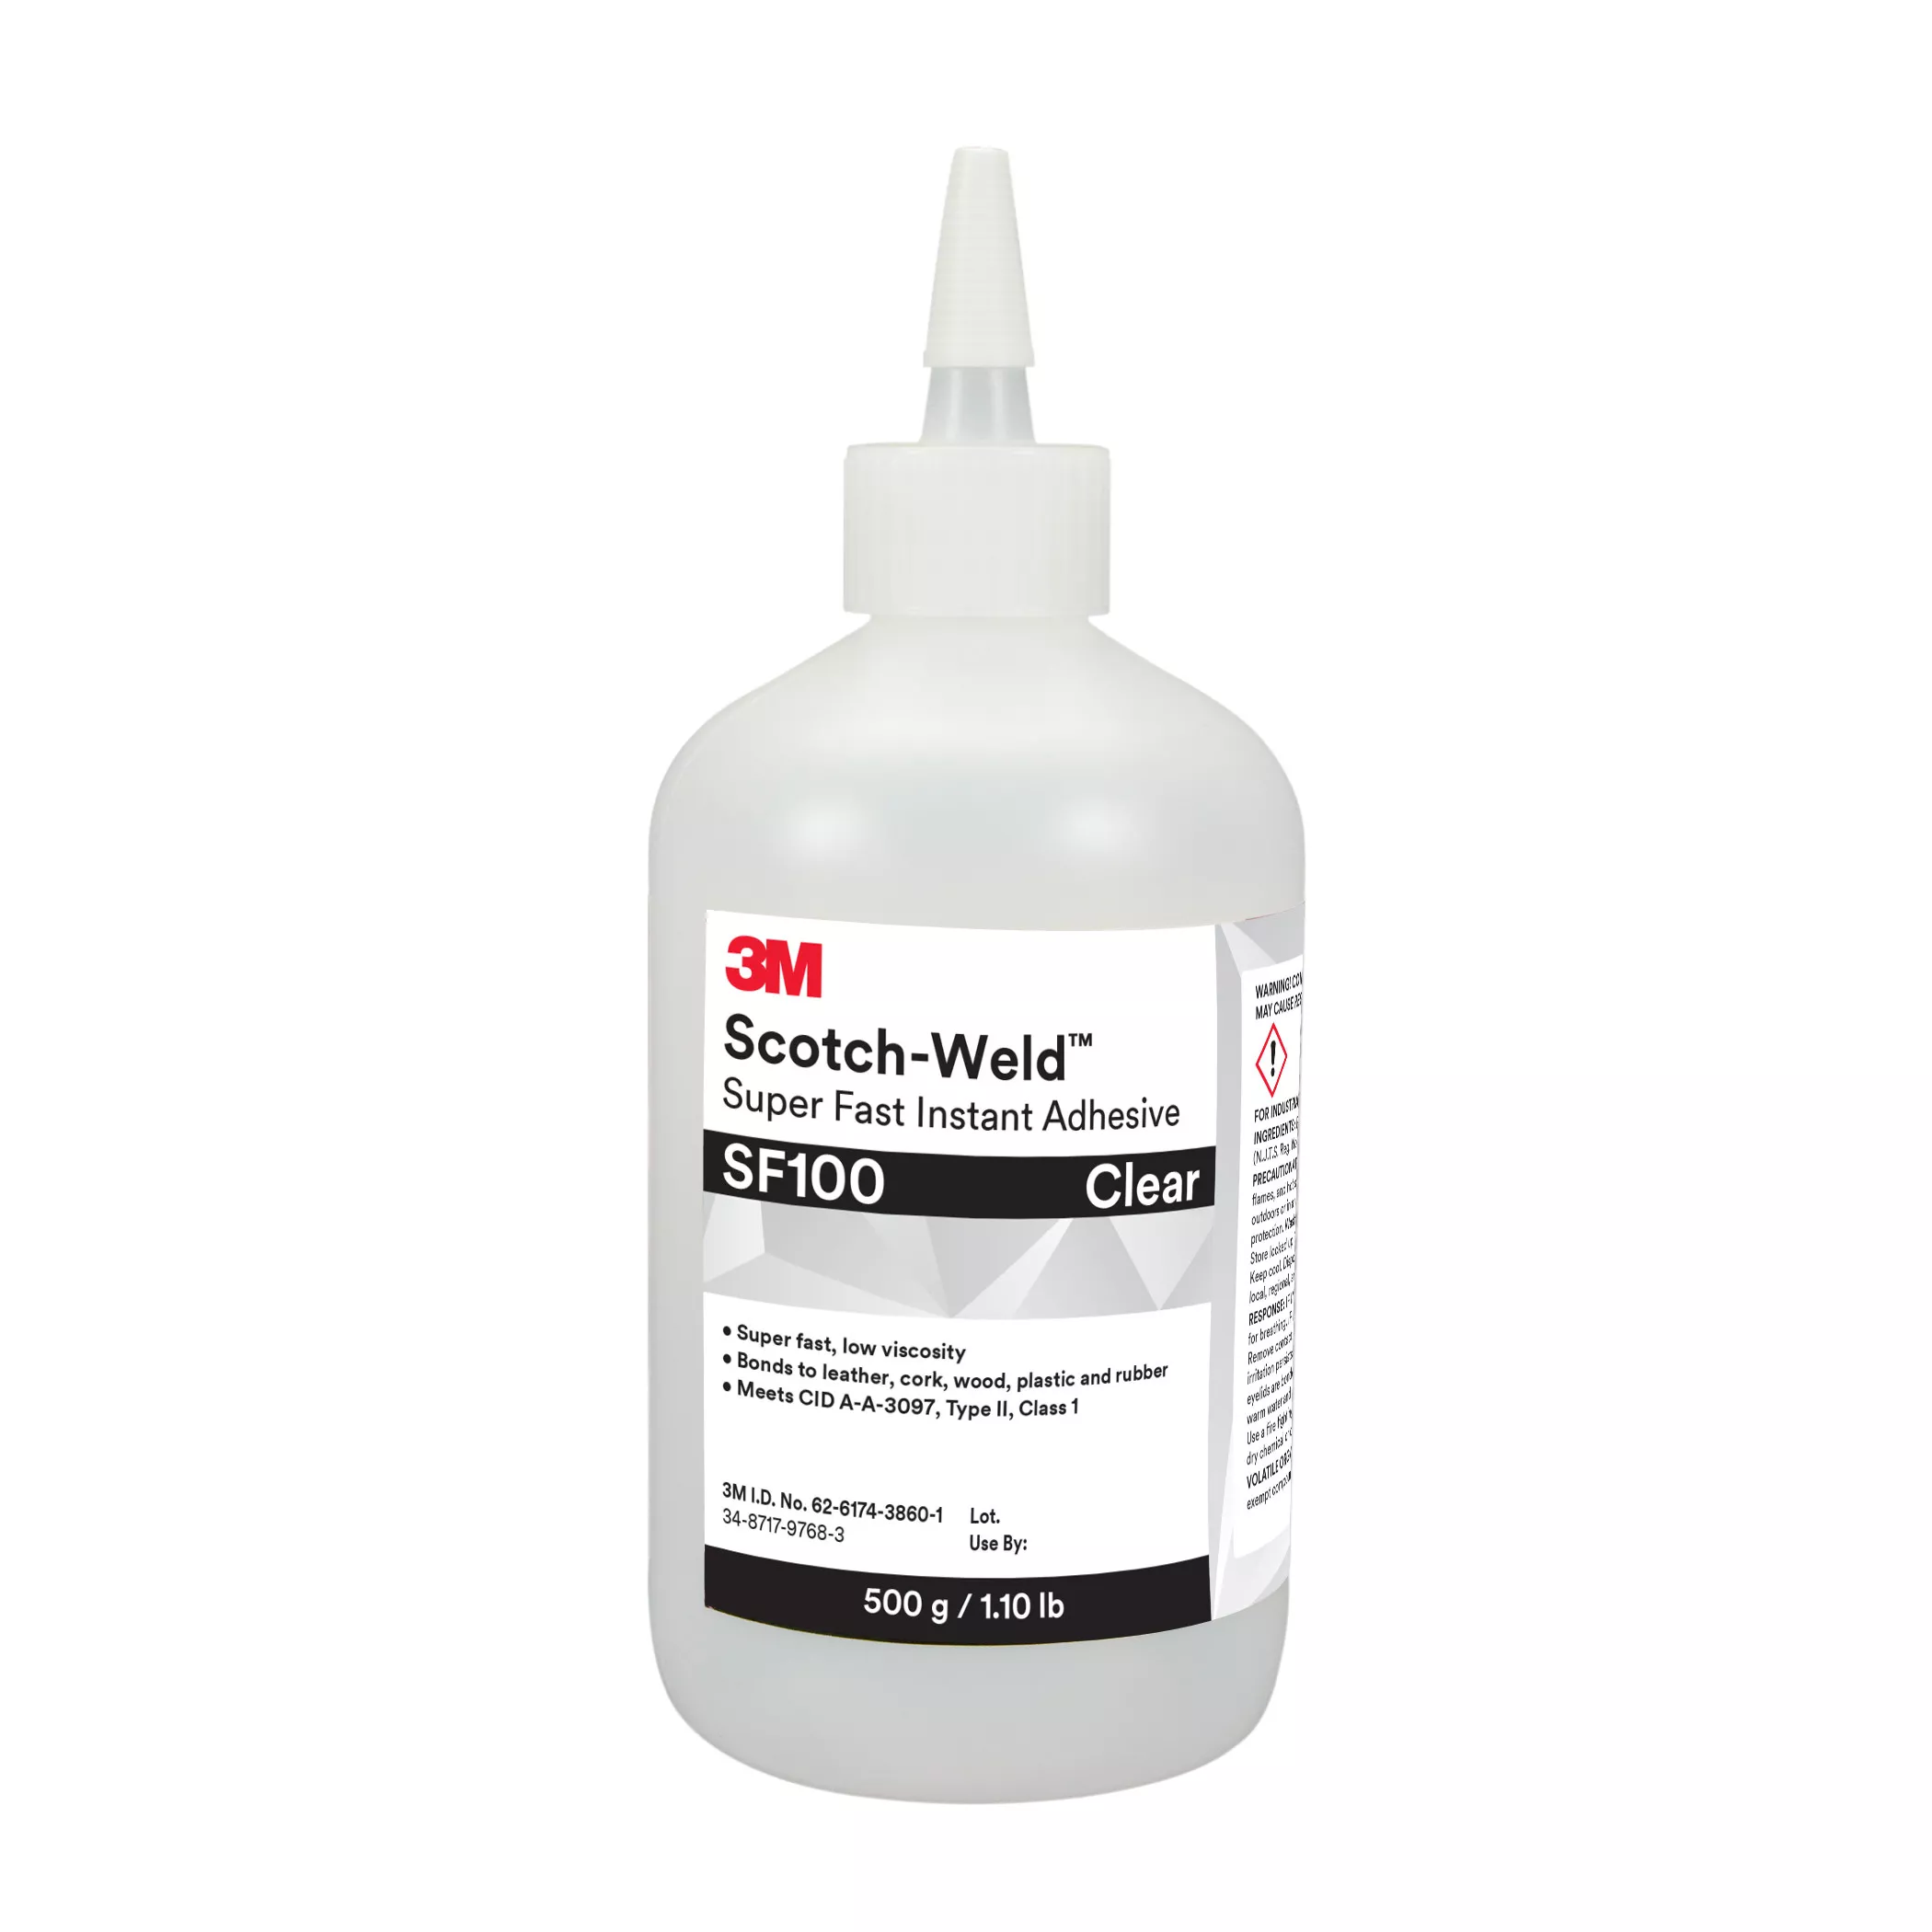 3M™ Scotch-Weld™ Super Fast Instant Adhesive SF100, Clear, 500 Gram, 1
Bottle/Case